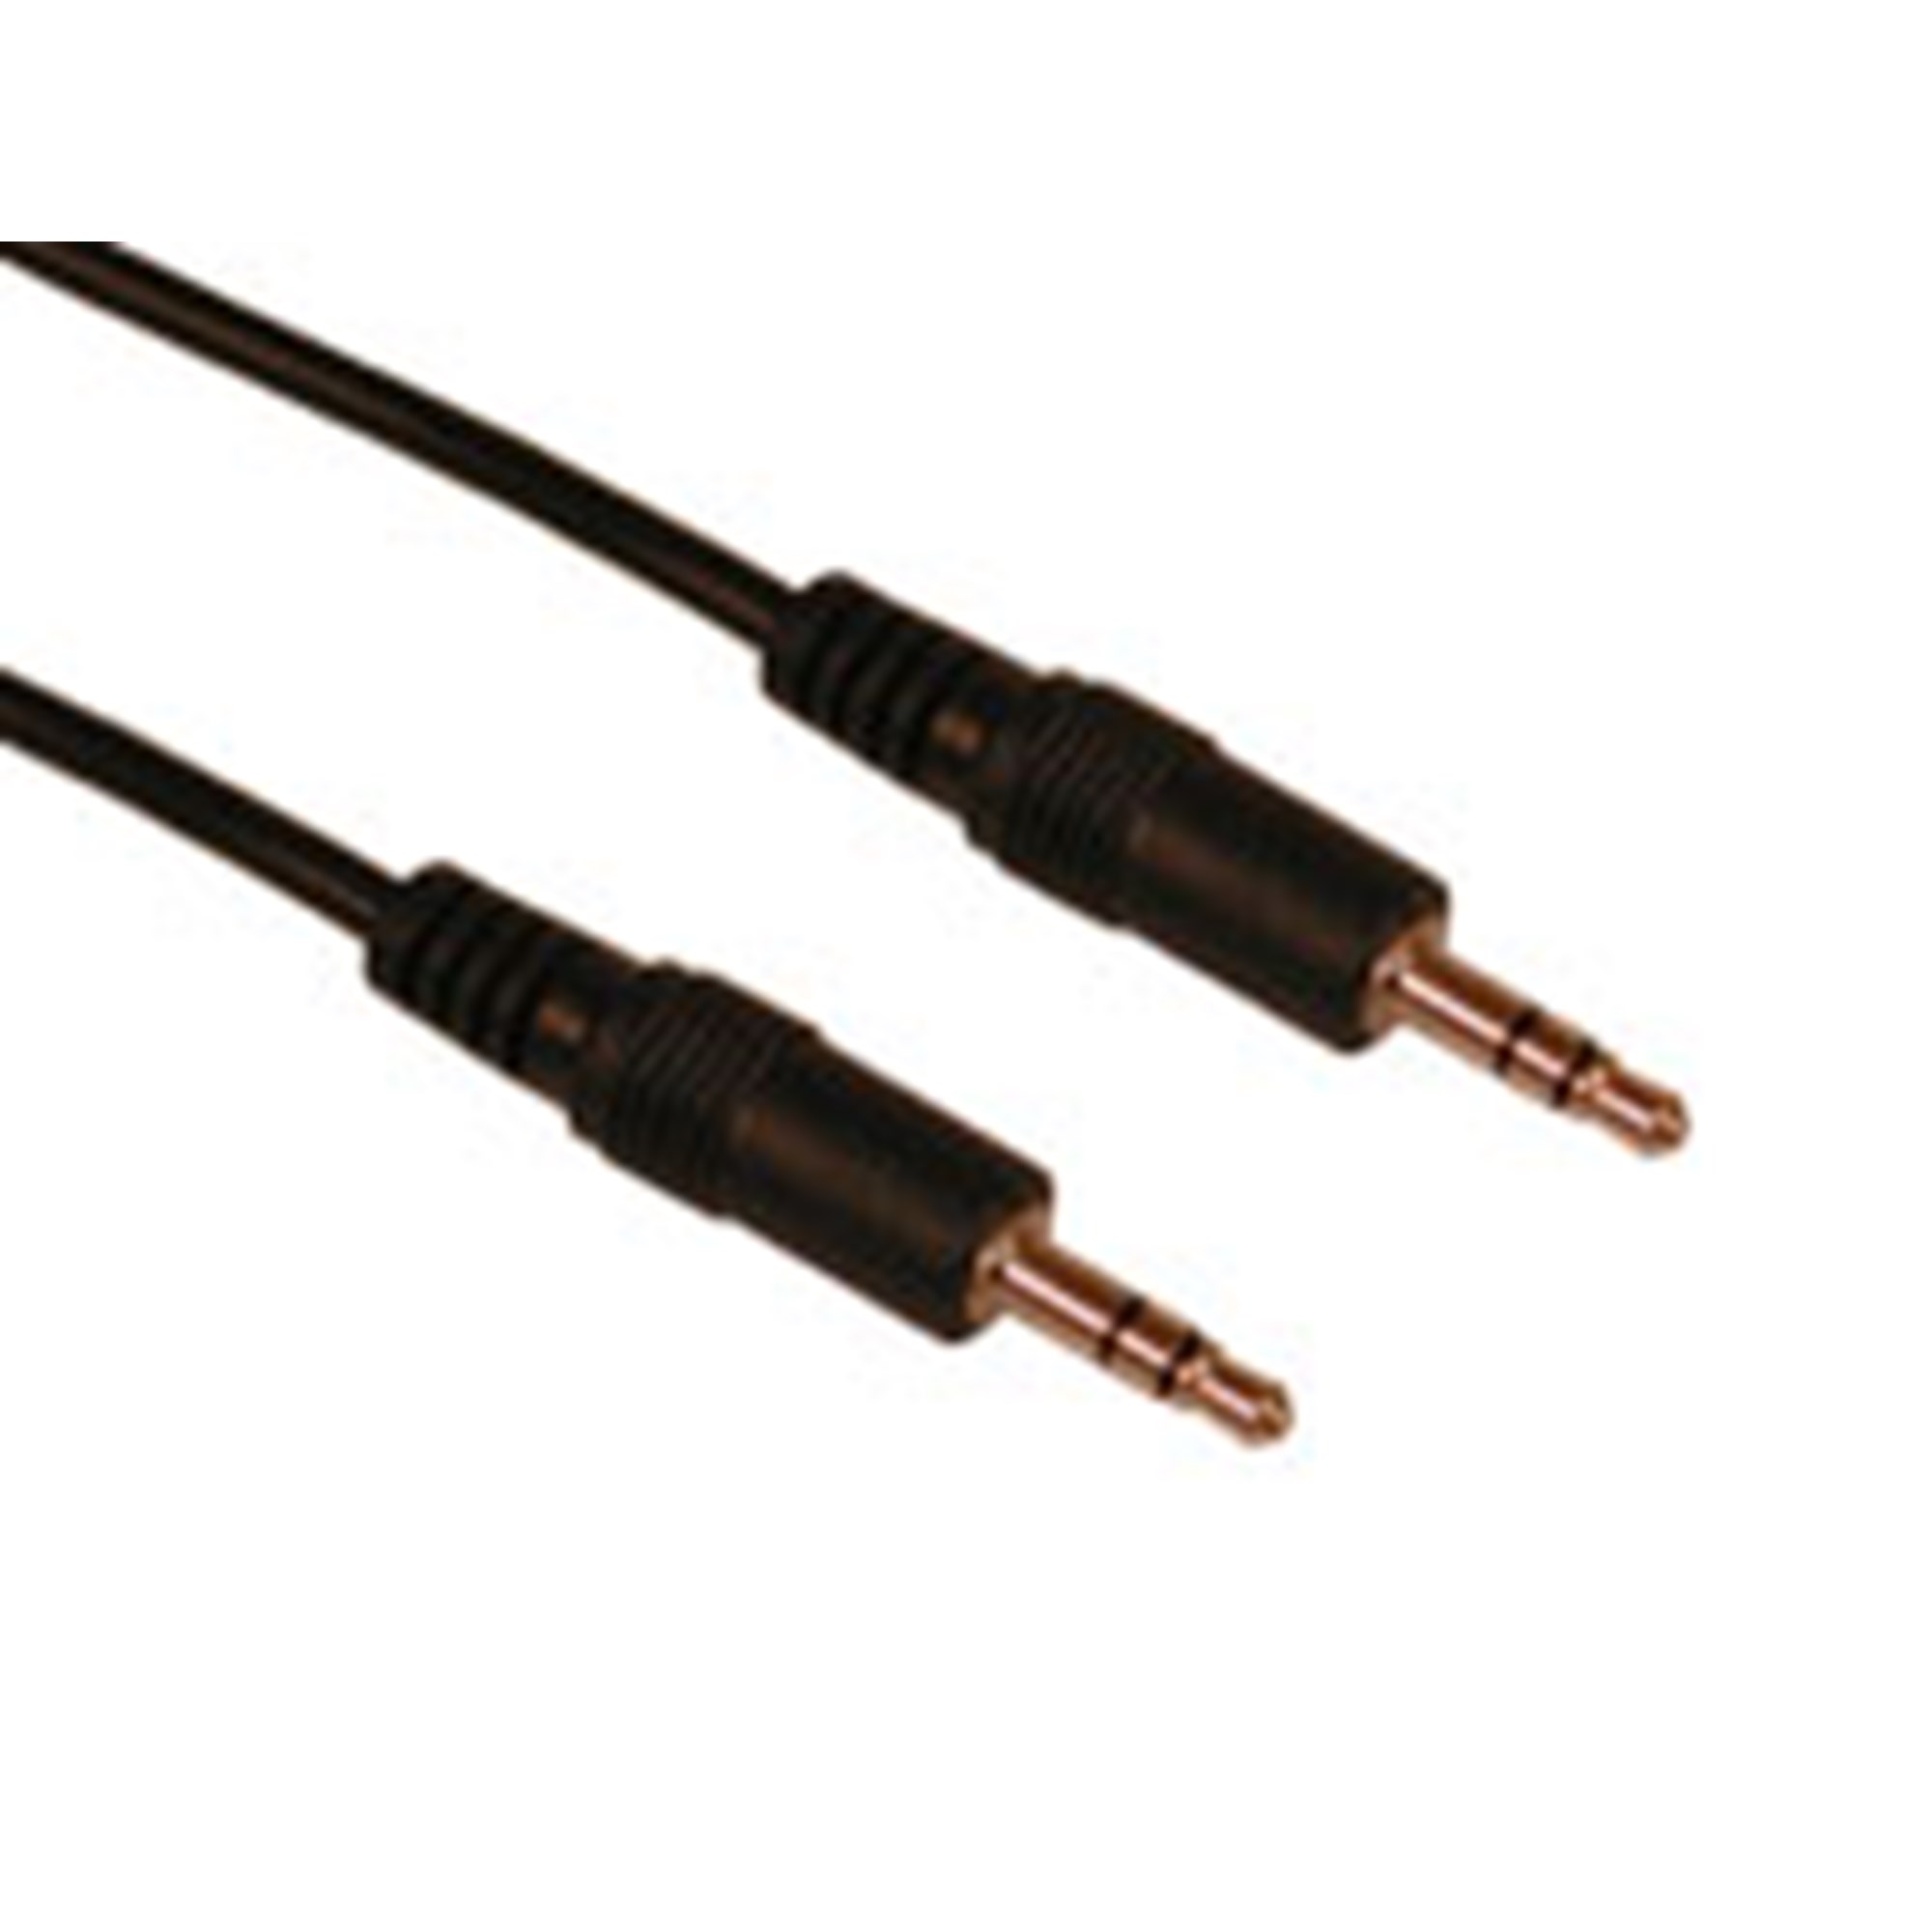 MiniJack m-m Cable, Black (2m)